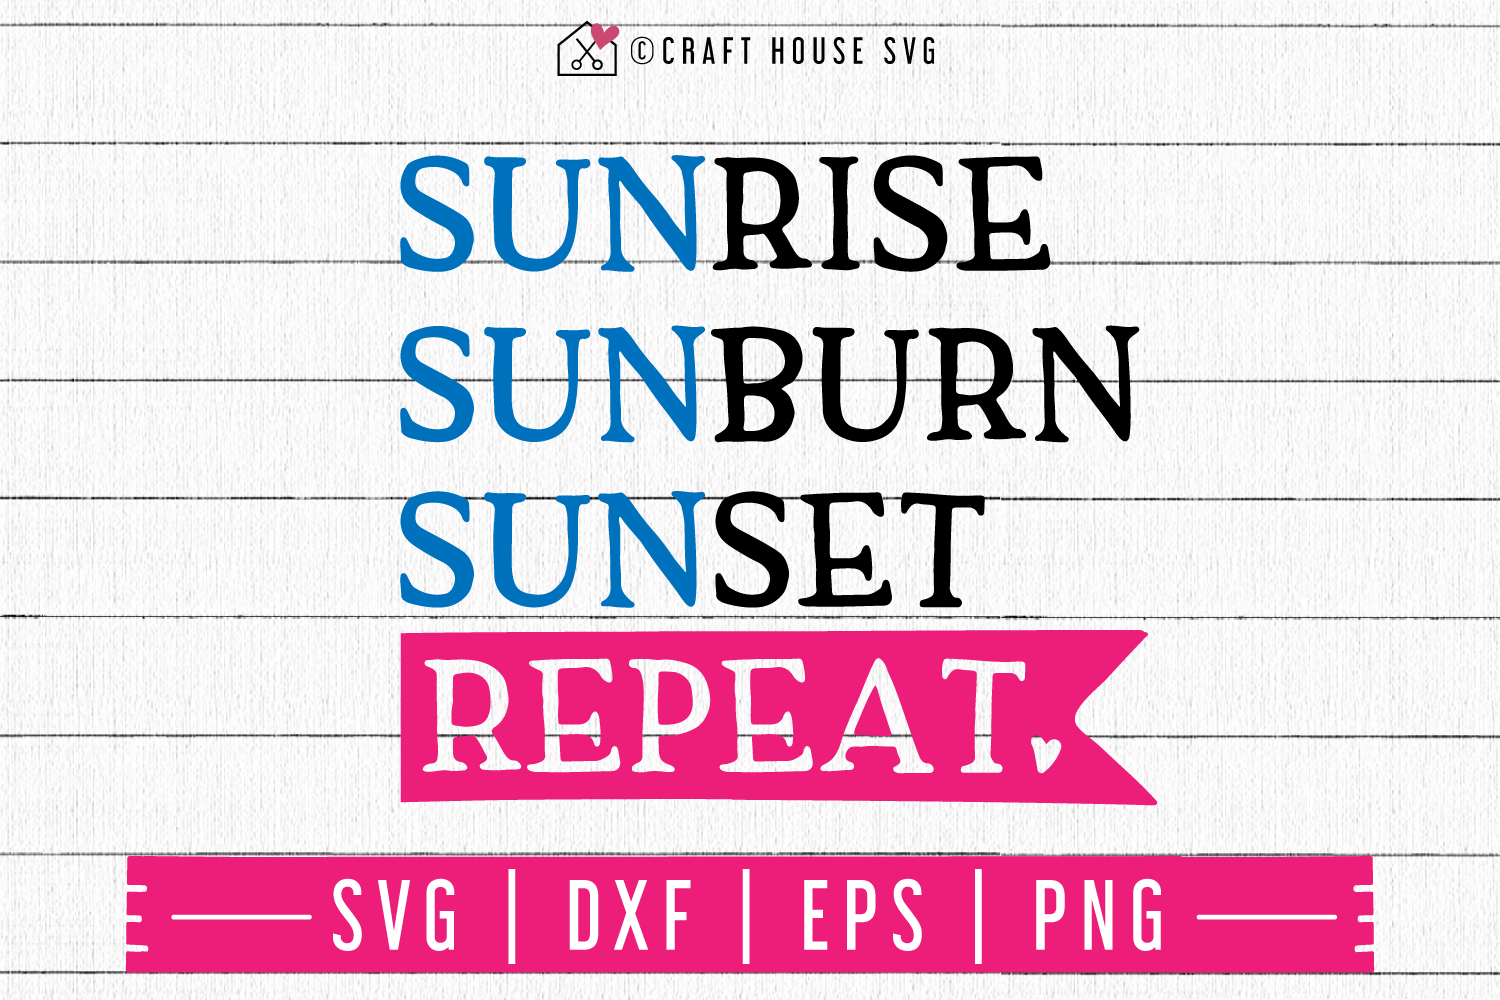 Sunrise sunburn sunset repeat SVG | M48F | A Summer SVG cut file Craft House SVG - SVG files for Cricut and Silhouette